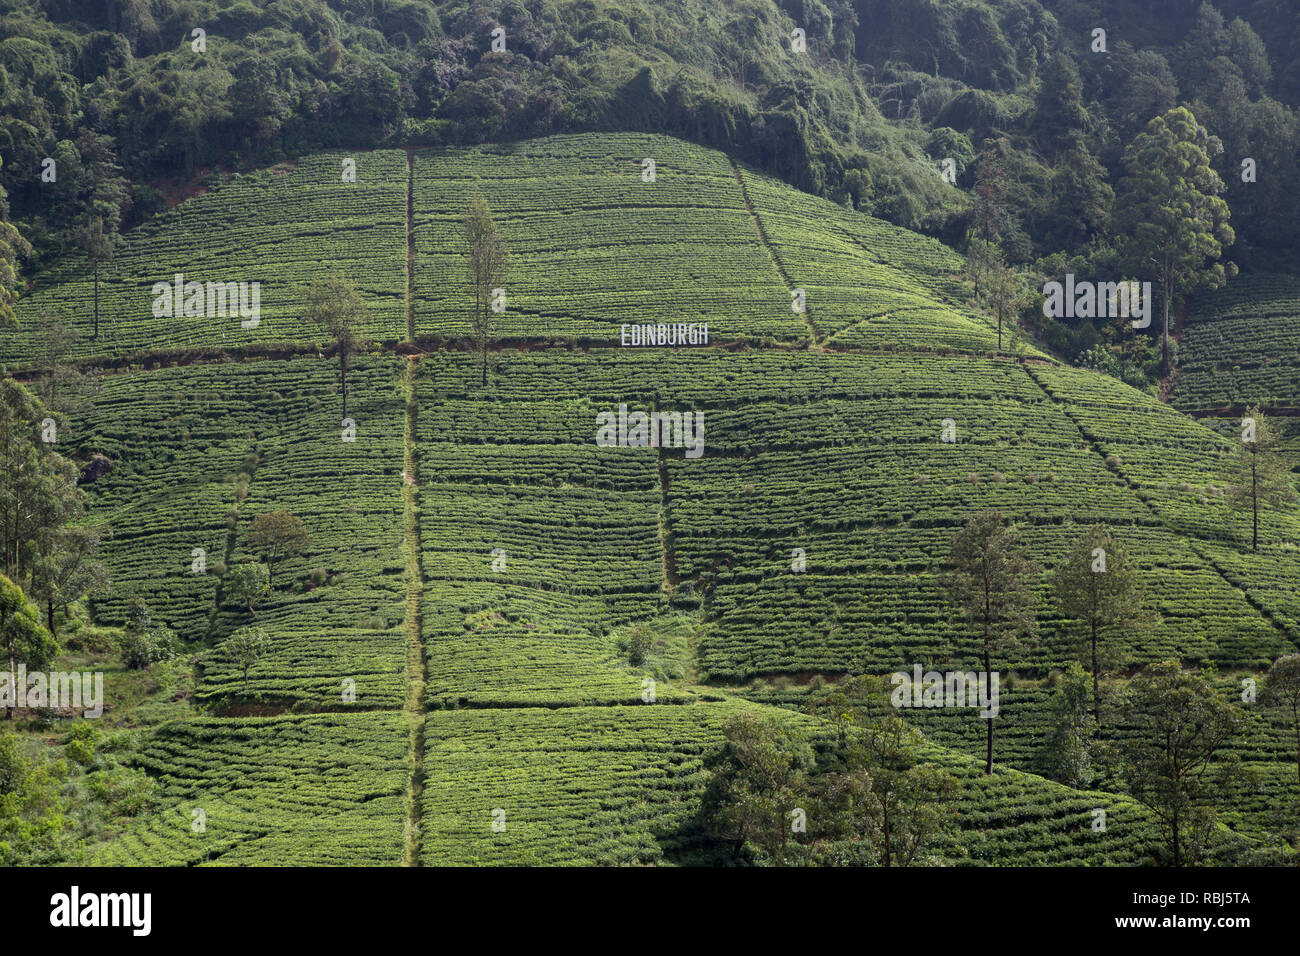 Edinburgh tea plantation in Nuwara Eliya, Sri Lanka Stock Photo